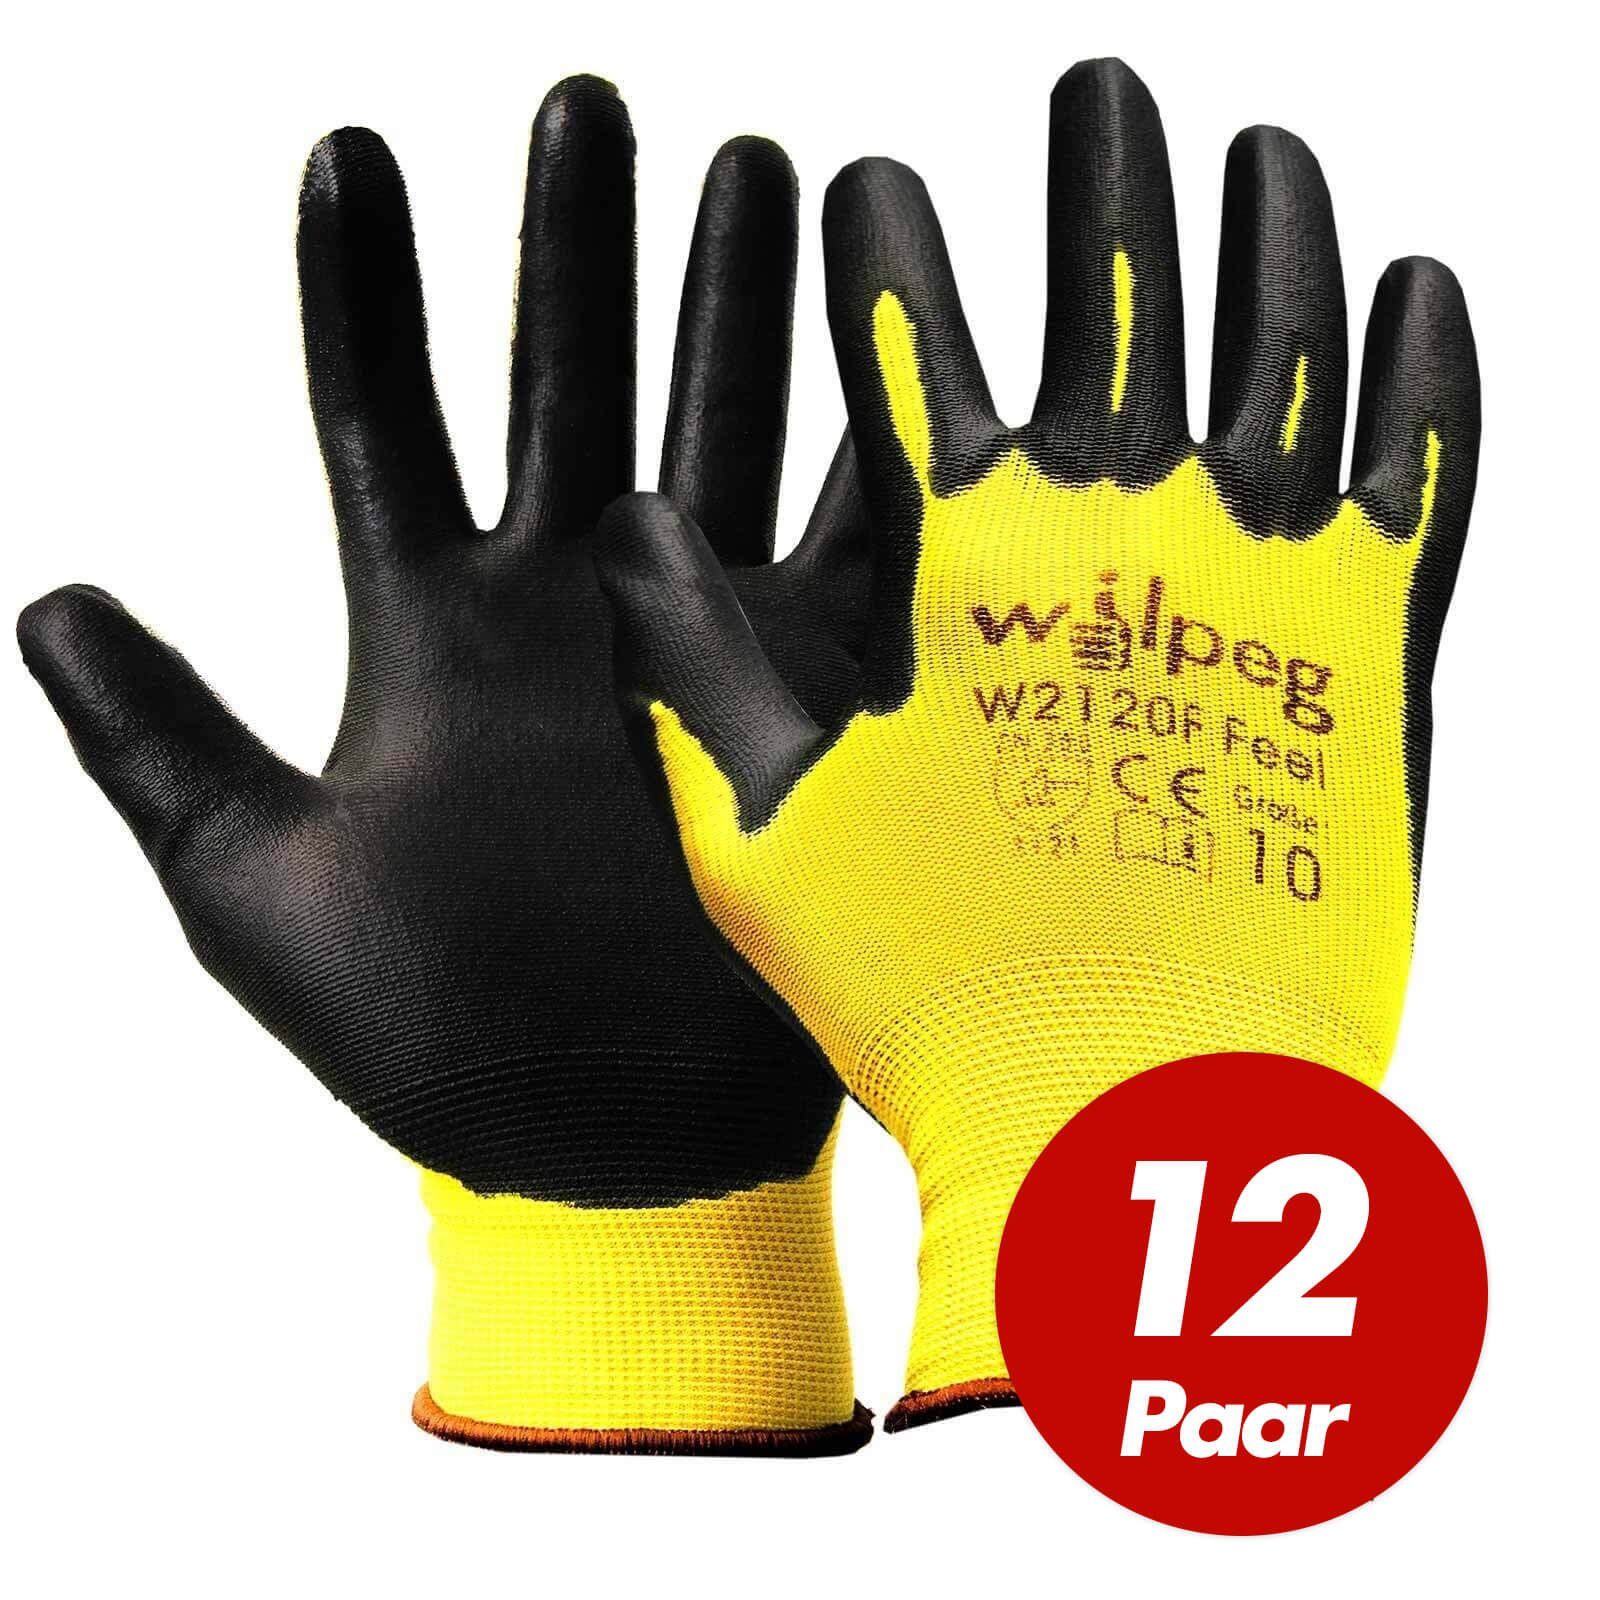 Paar W2120F Handschuhe - wilpeg® (Spar-Set) PU Feel schwarz/gelb Nitril-Handschuhe WILPEG Nylon-Strickhandschuhe, 12